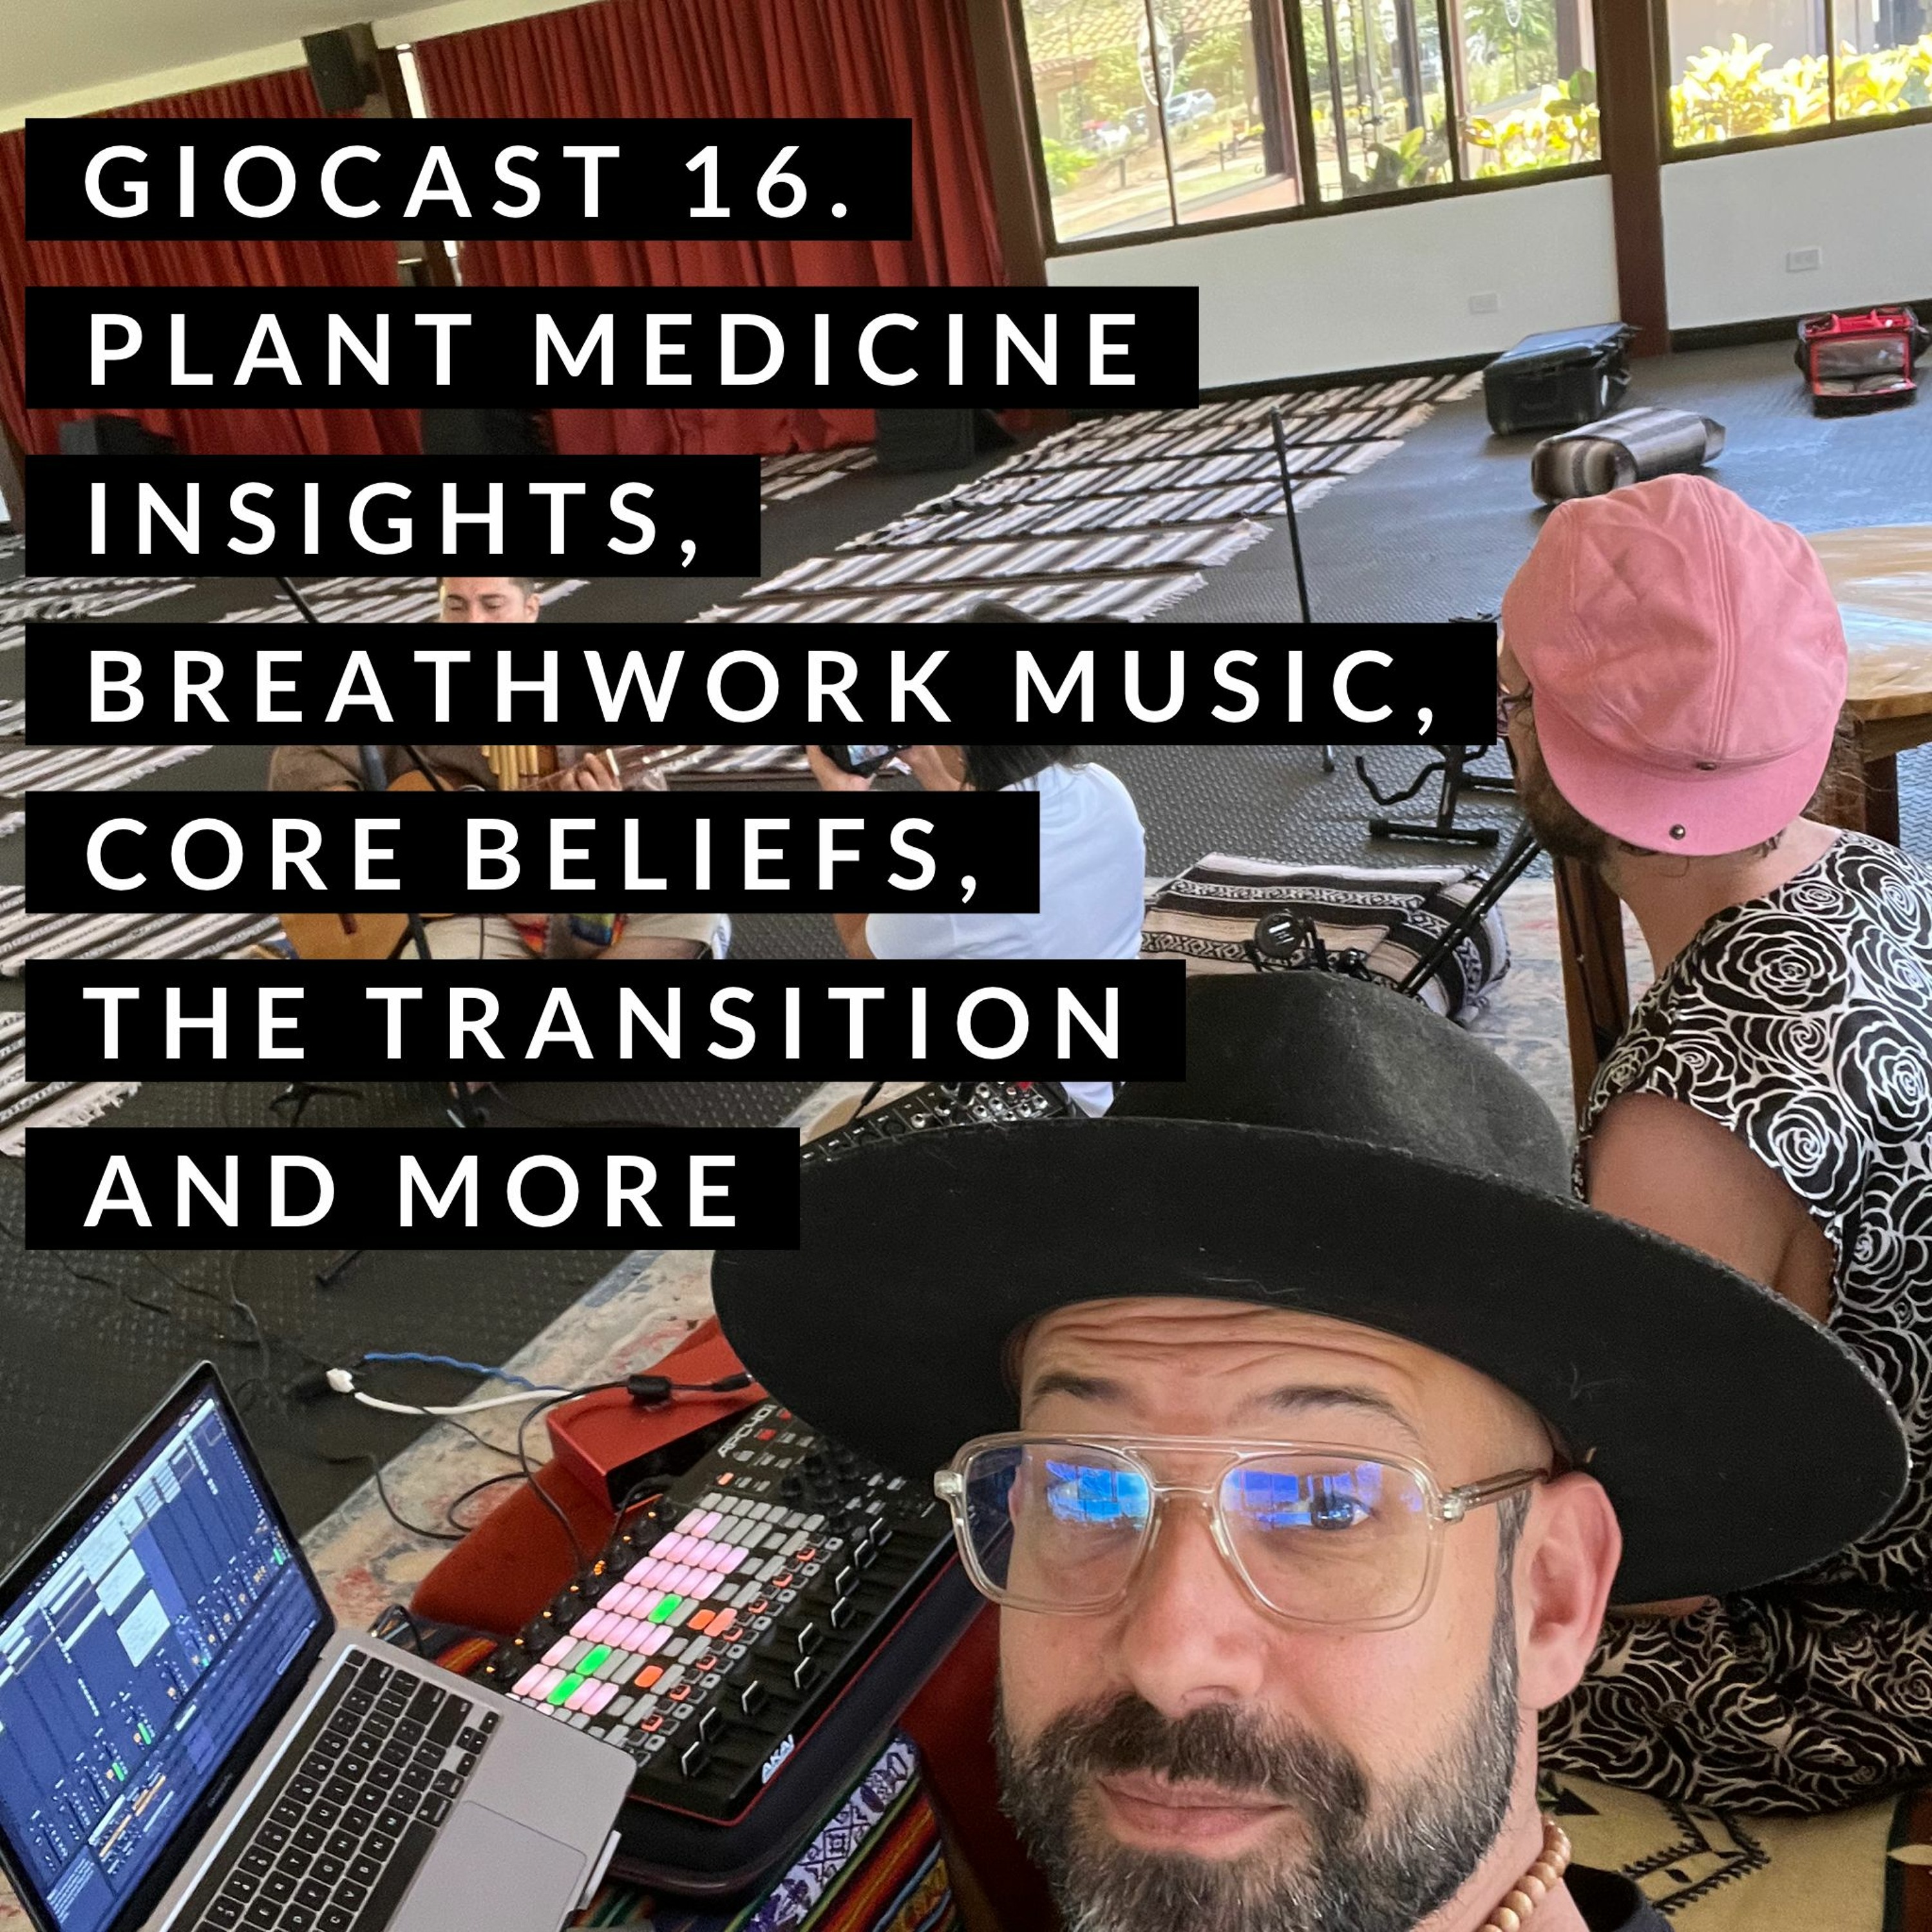 Giocast 16 - Plant Medicine Insights, Breathwork Music, Core Beliefs and More